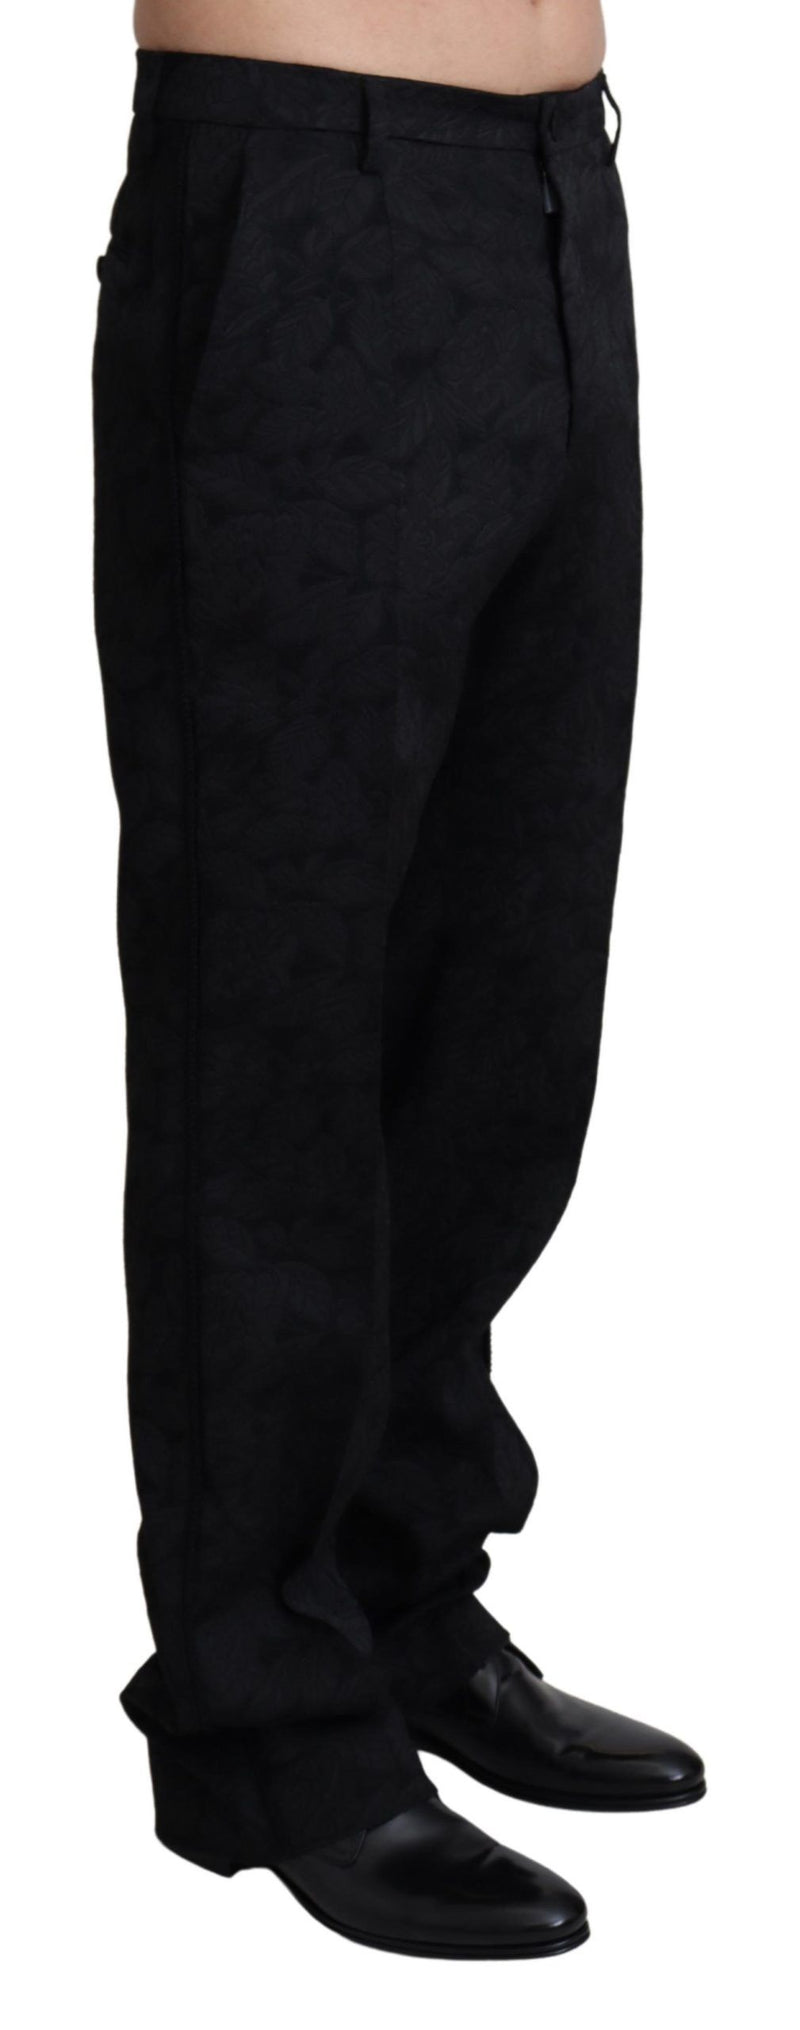 Dolce & Gabbana Elegant Black Dress Pants for Sophisticated Men's Style